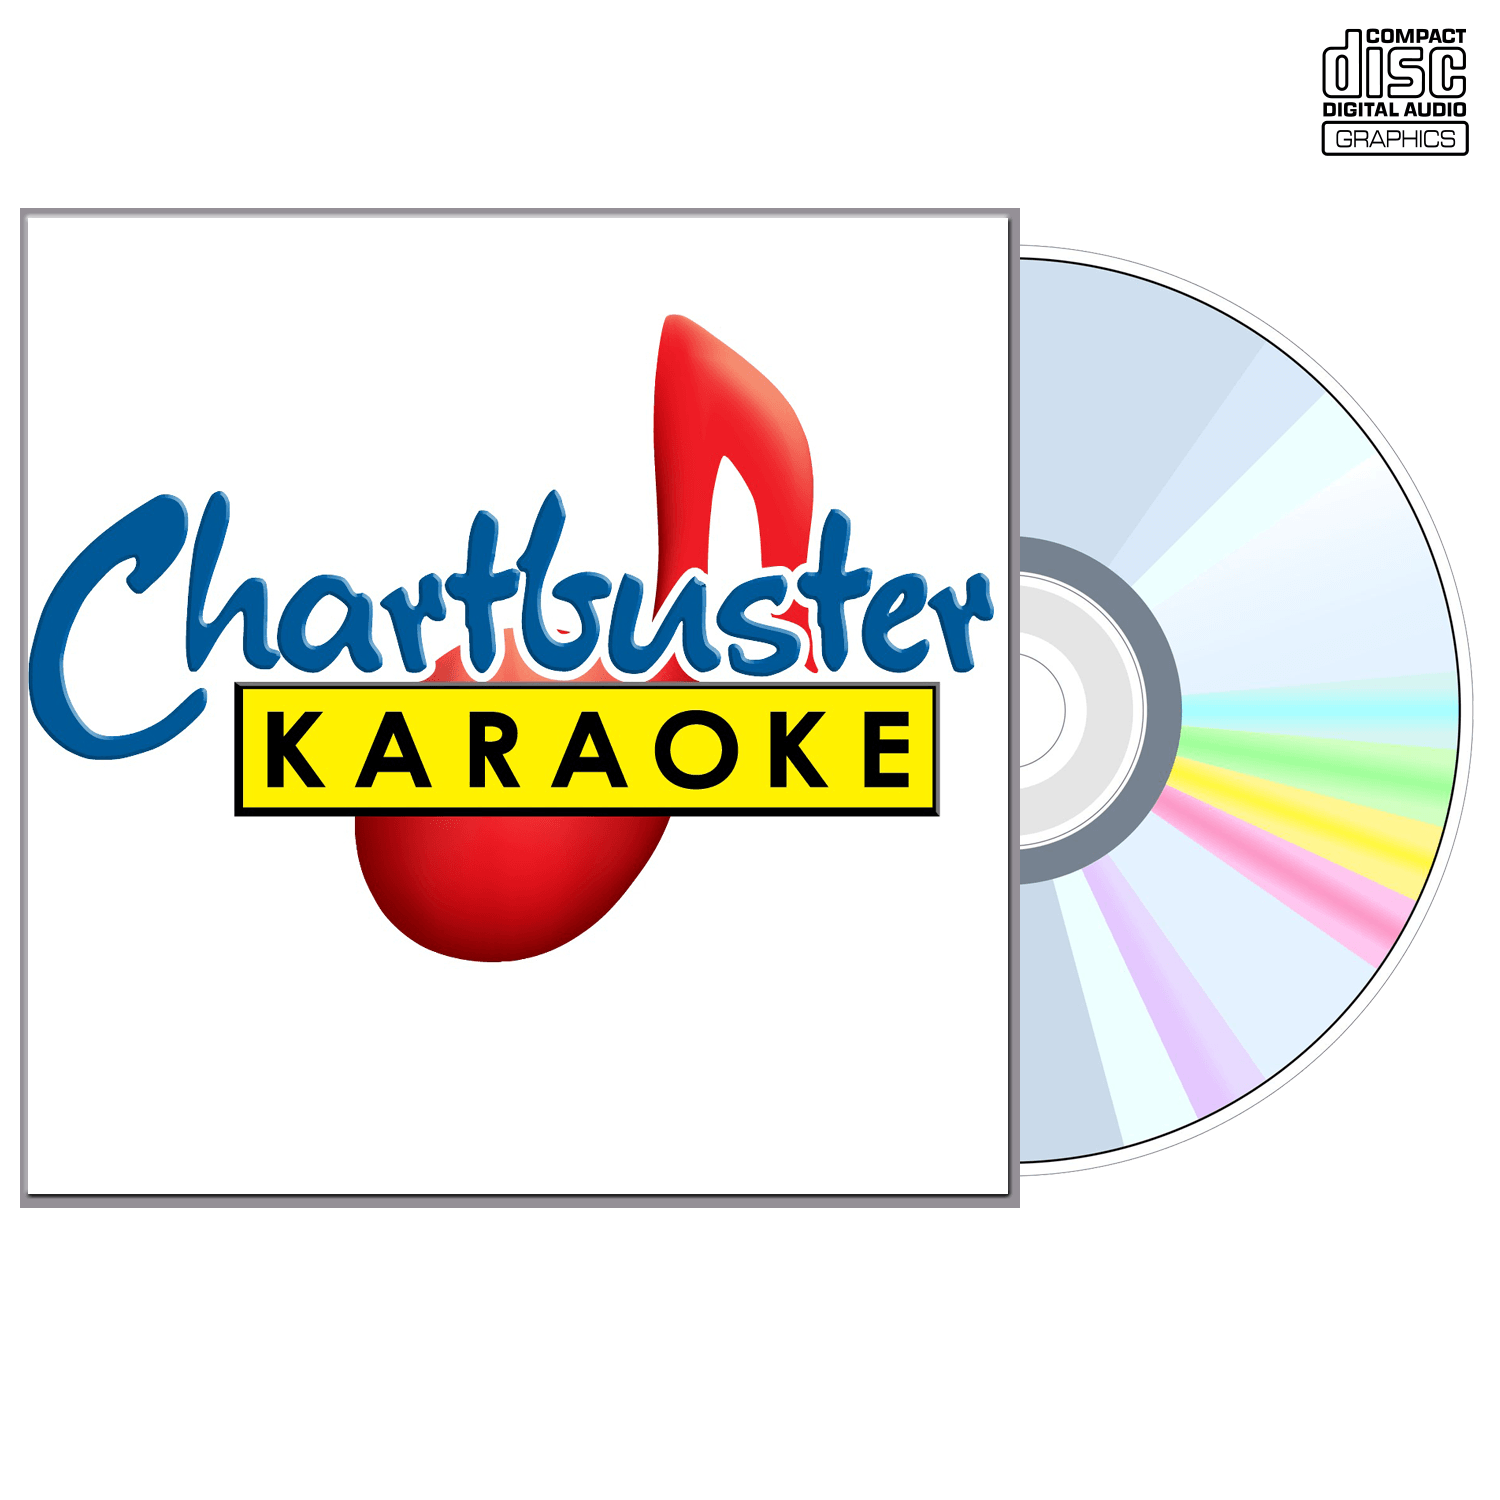 Alison Krauss Vol 1 - CD+G - Chartbuster Karaoke - Karaoke Home Entertainment